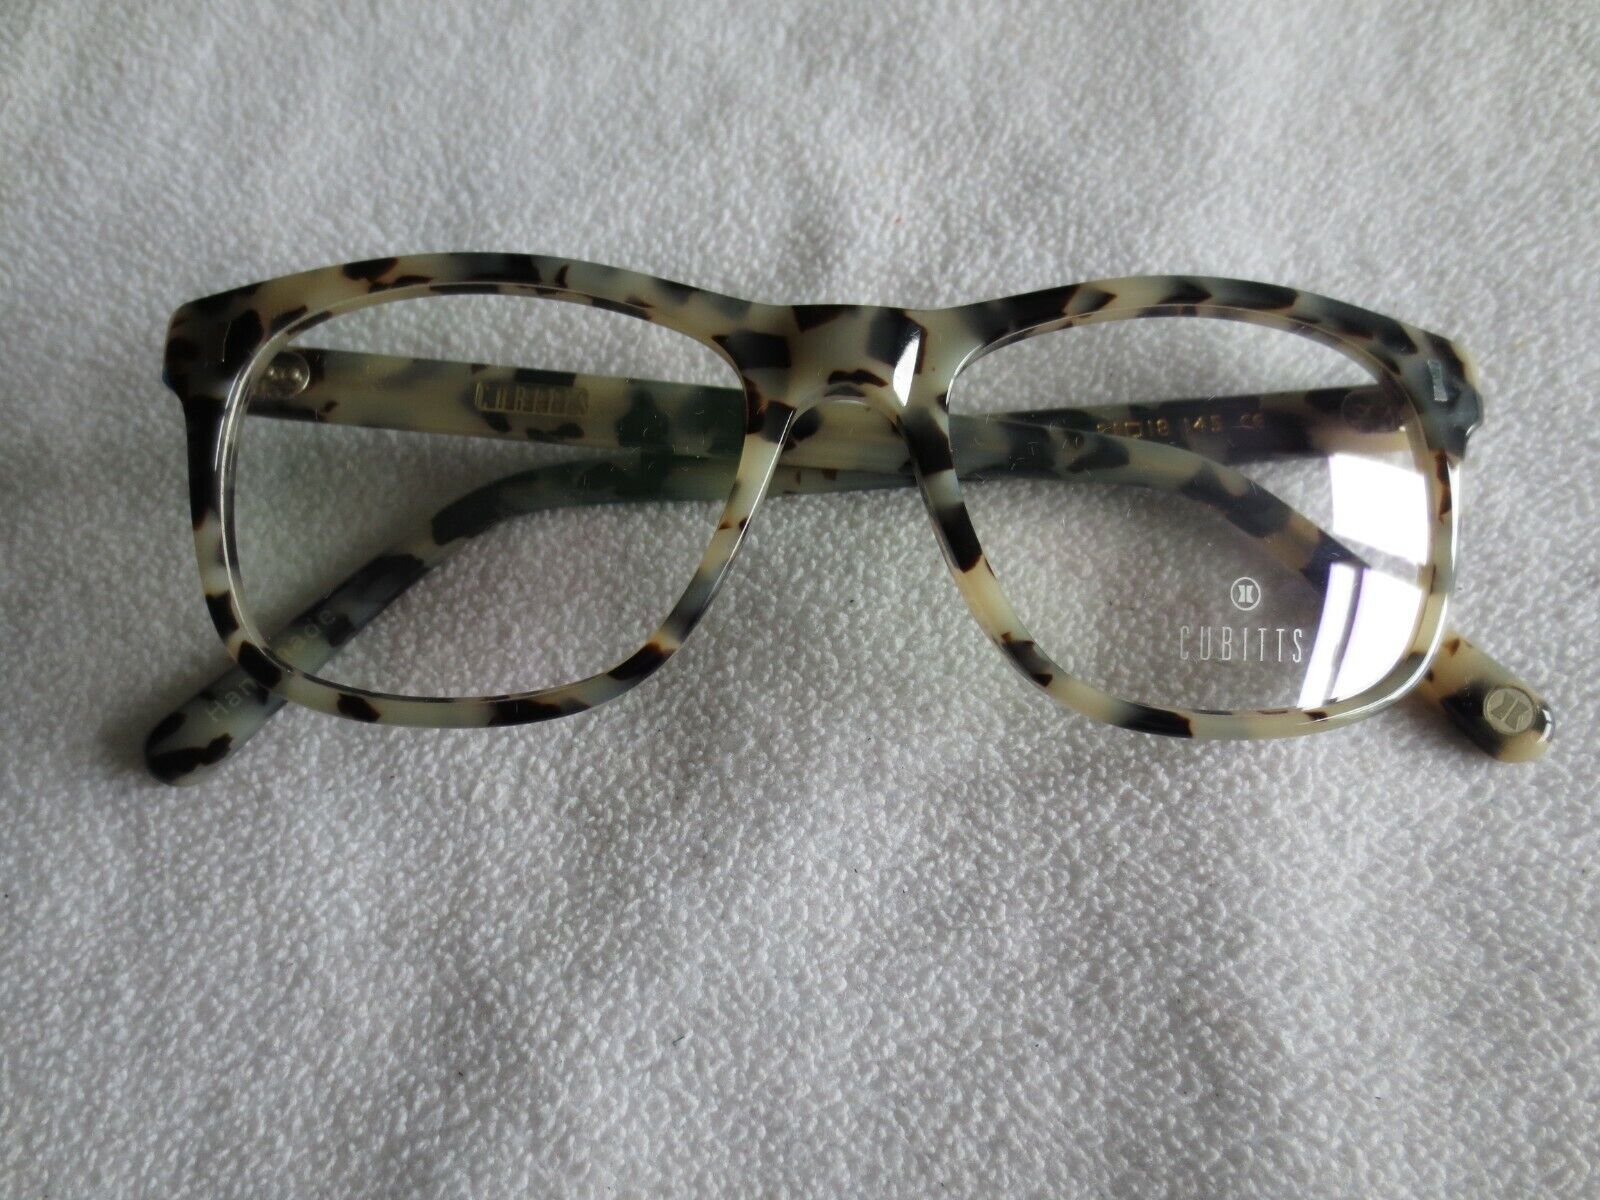 Cubitts brown print (granite) regular glasses frames. Calthorpe. Ograniczona sprzedaż